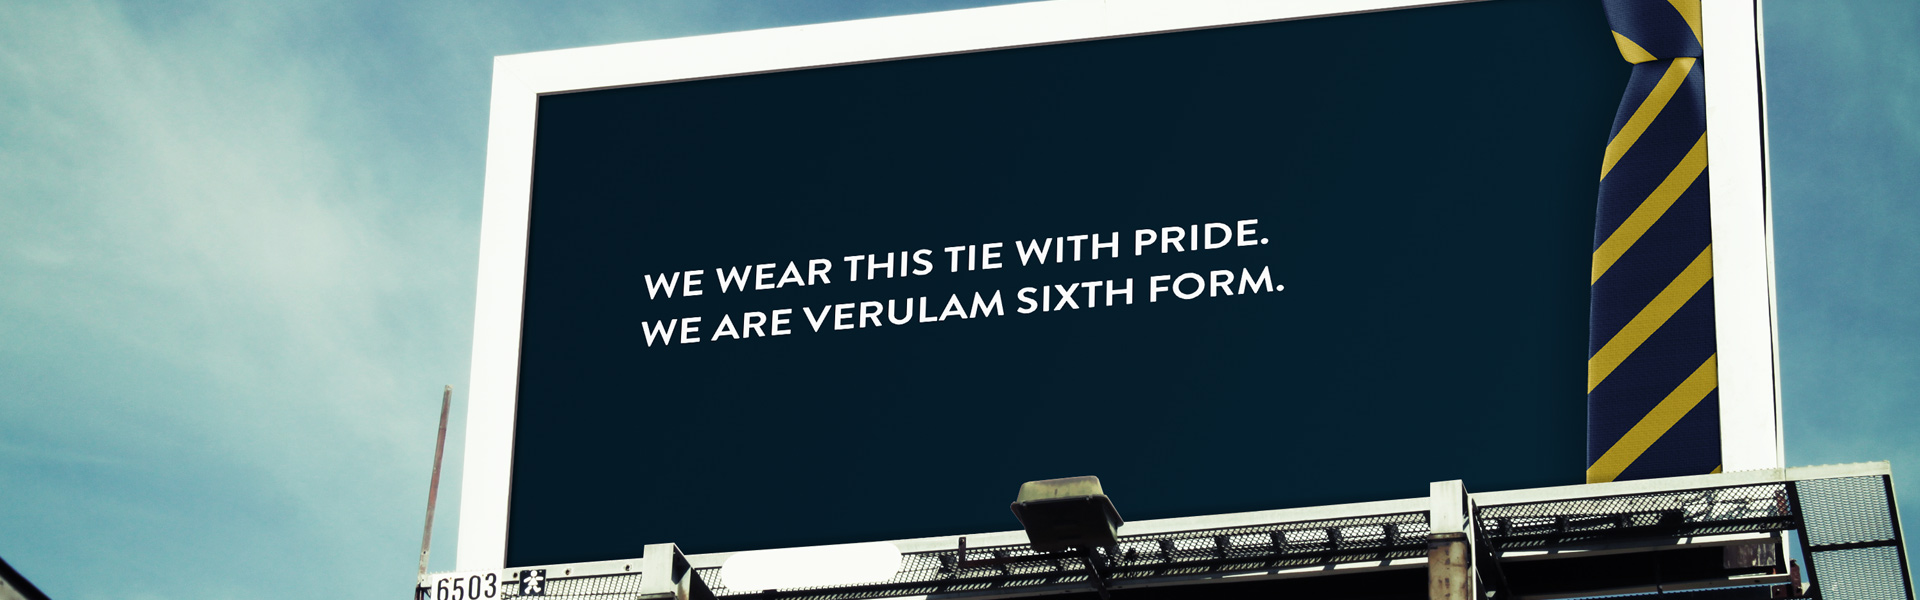 large billboard advertising verulam sixth form